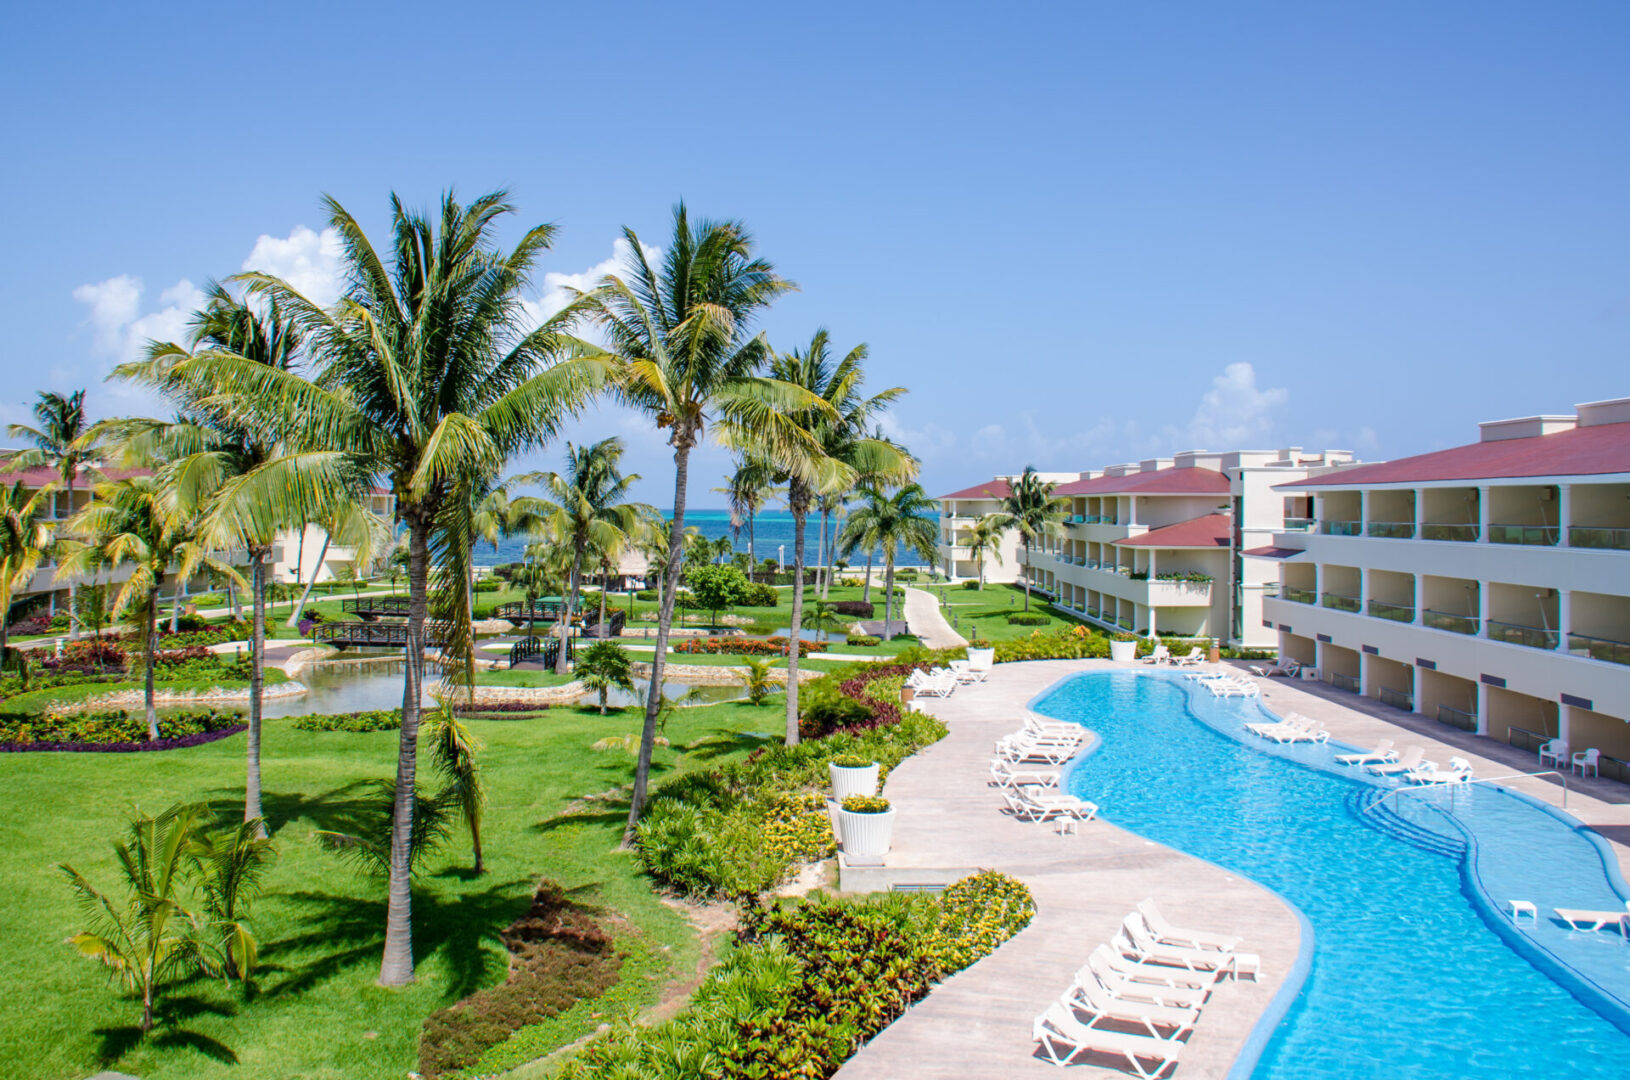 Moon Palace Sunrise, Architecture, Cancun, Room, Swim-up Suite, Outdoor Area, Pool
Moon Palace Sunrise Architecture